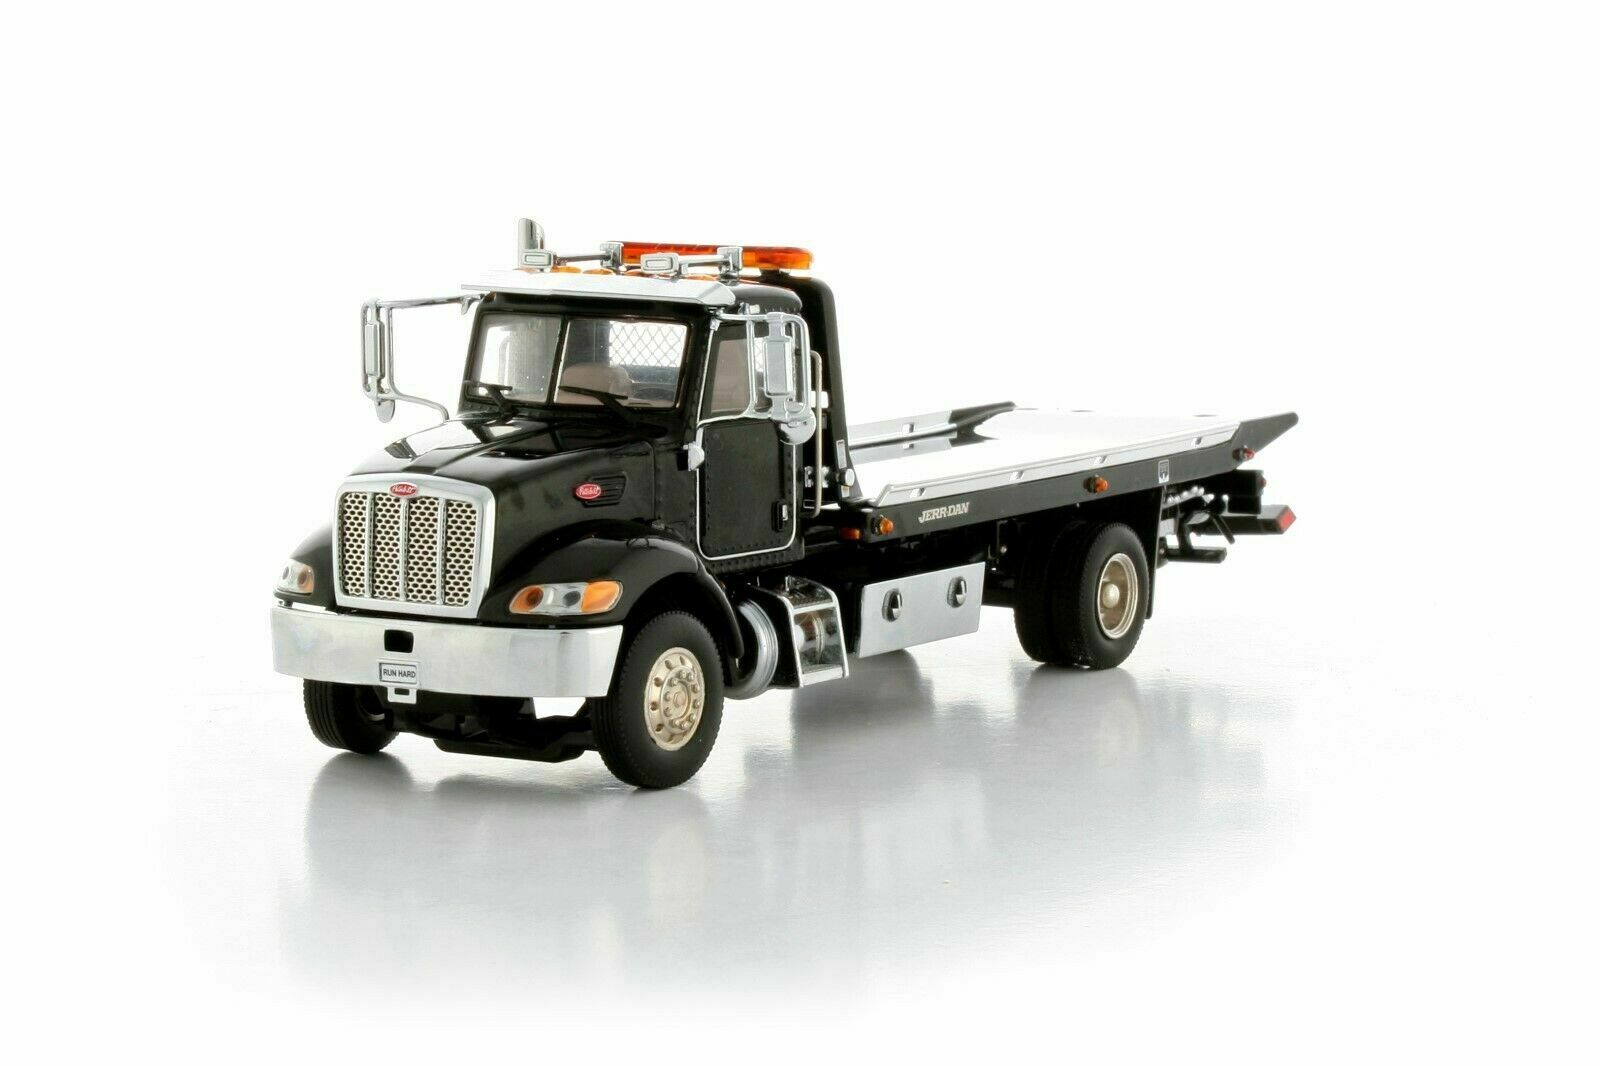 Peterbilt 335 Jerr-dan Rollback Truck - Black - Twh 1:50 Scale #080-01100 New!